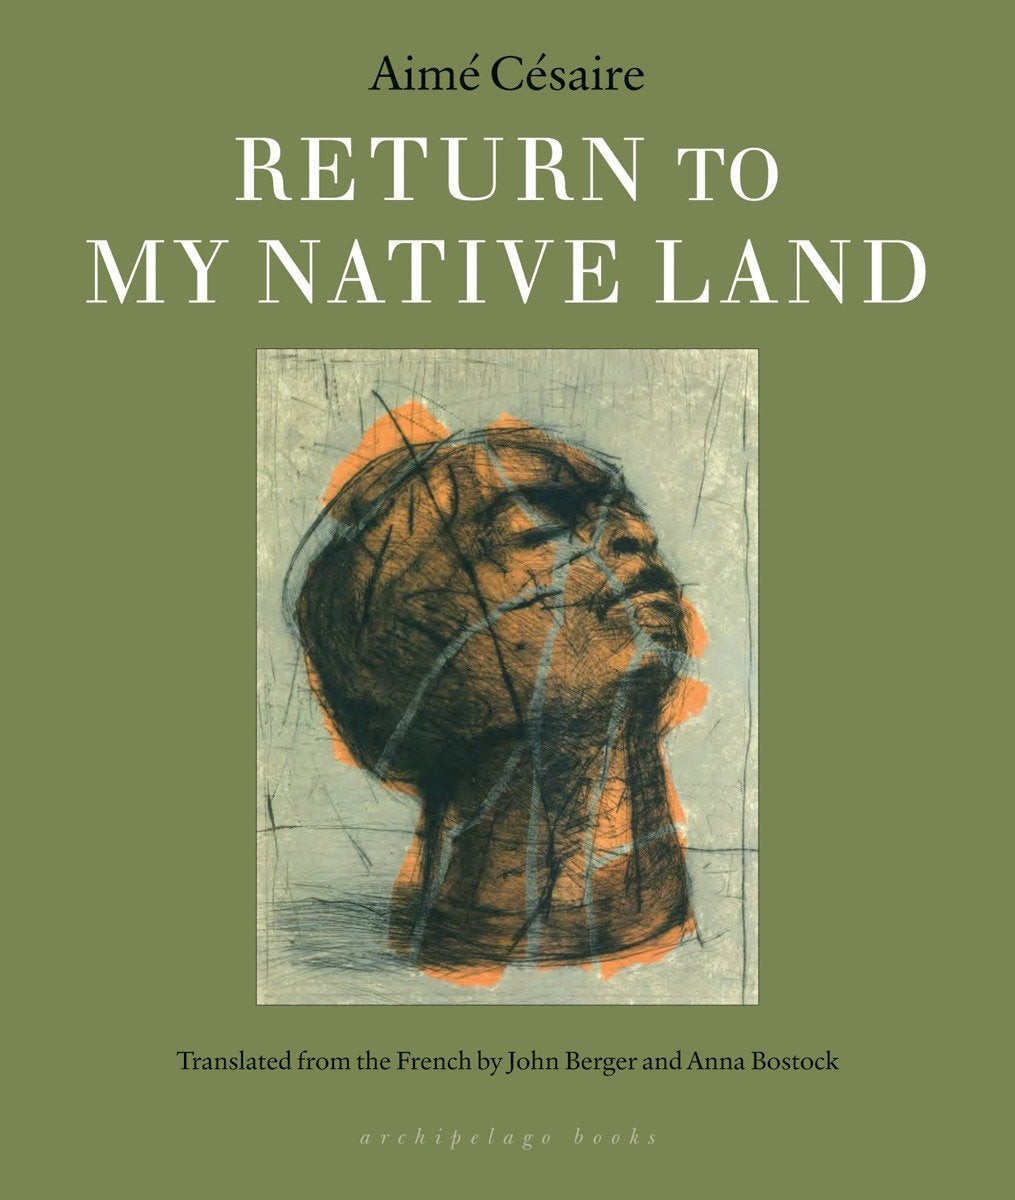 Return to my Native Land, by Aimé Césaire